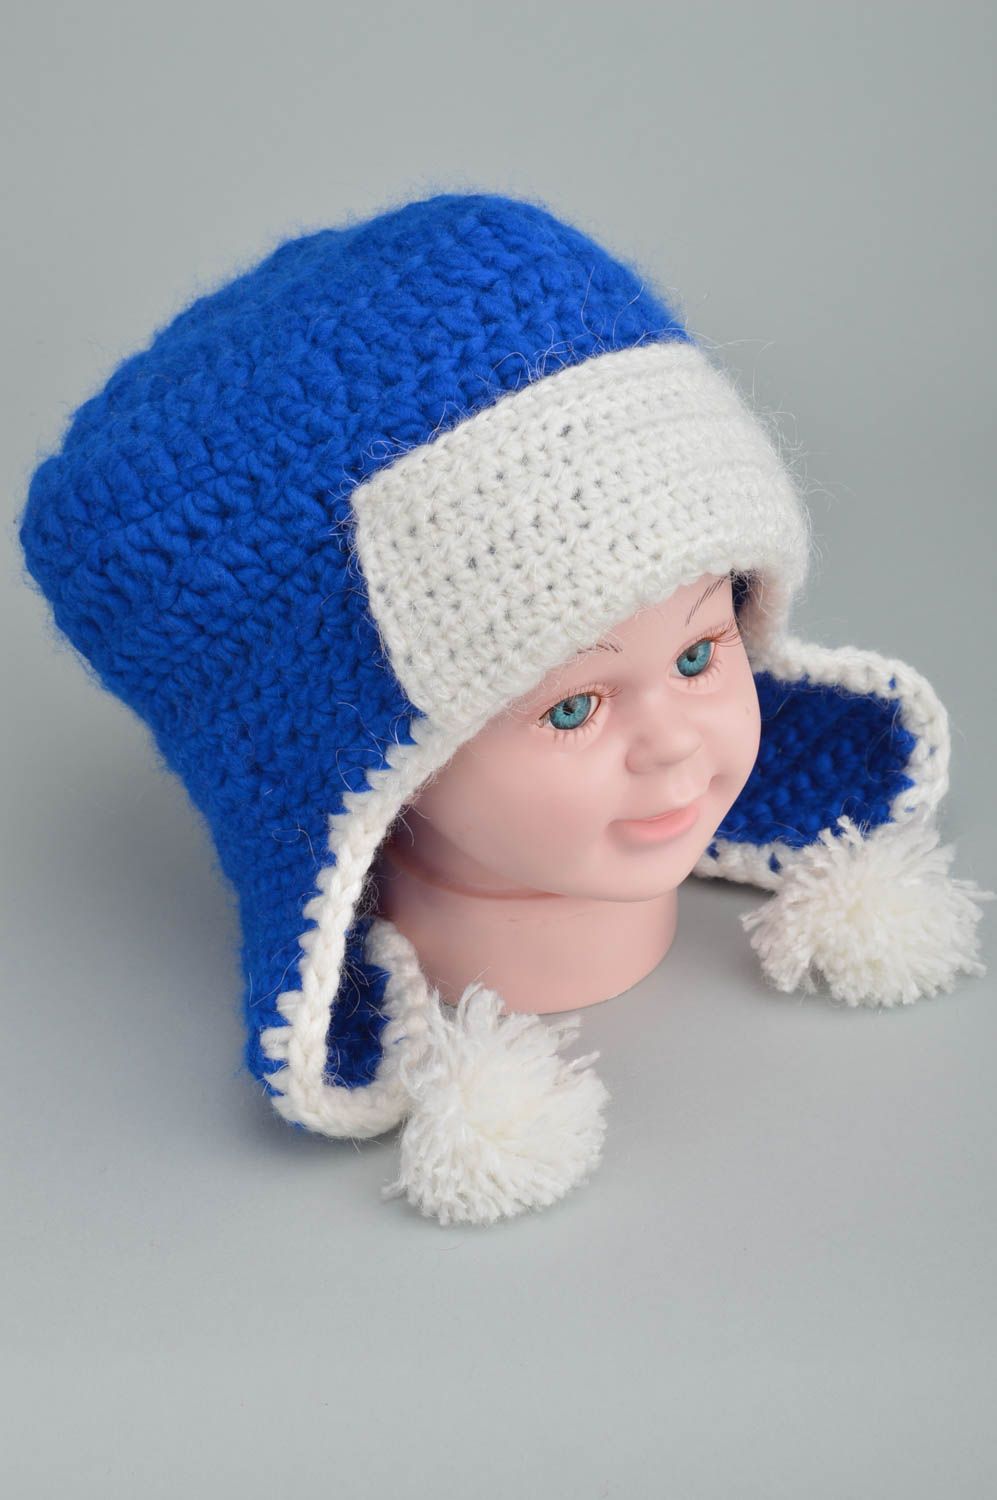 Woven handmade cap cute accessories for kids unusual beautiful head dress photo 5